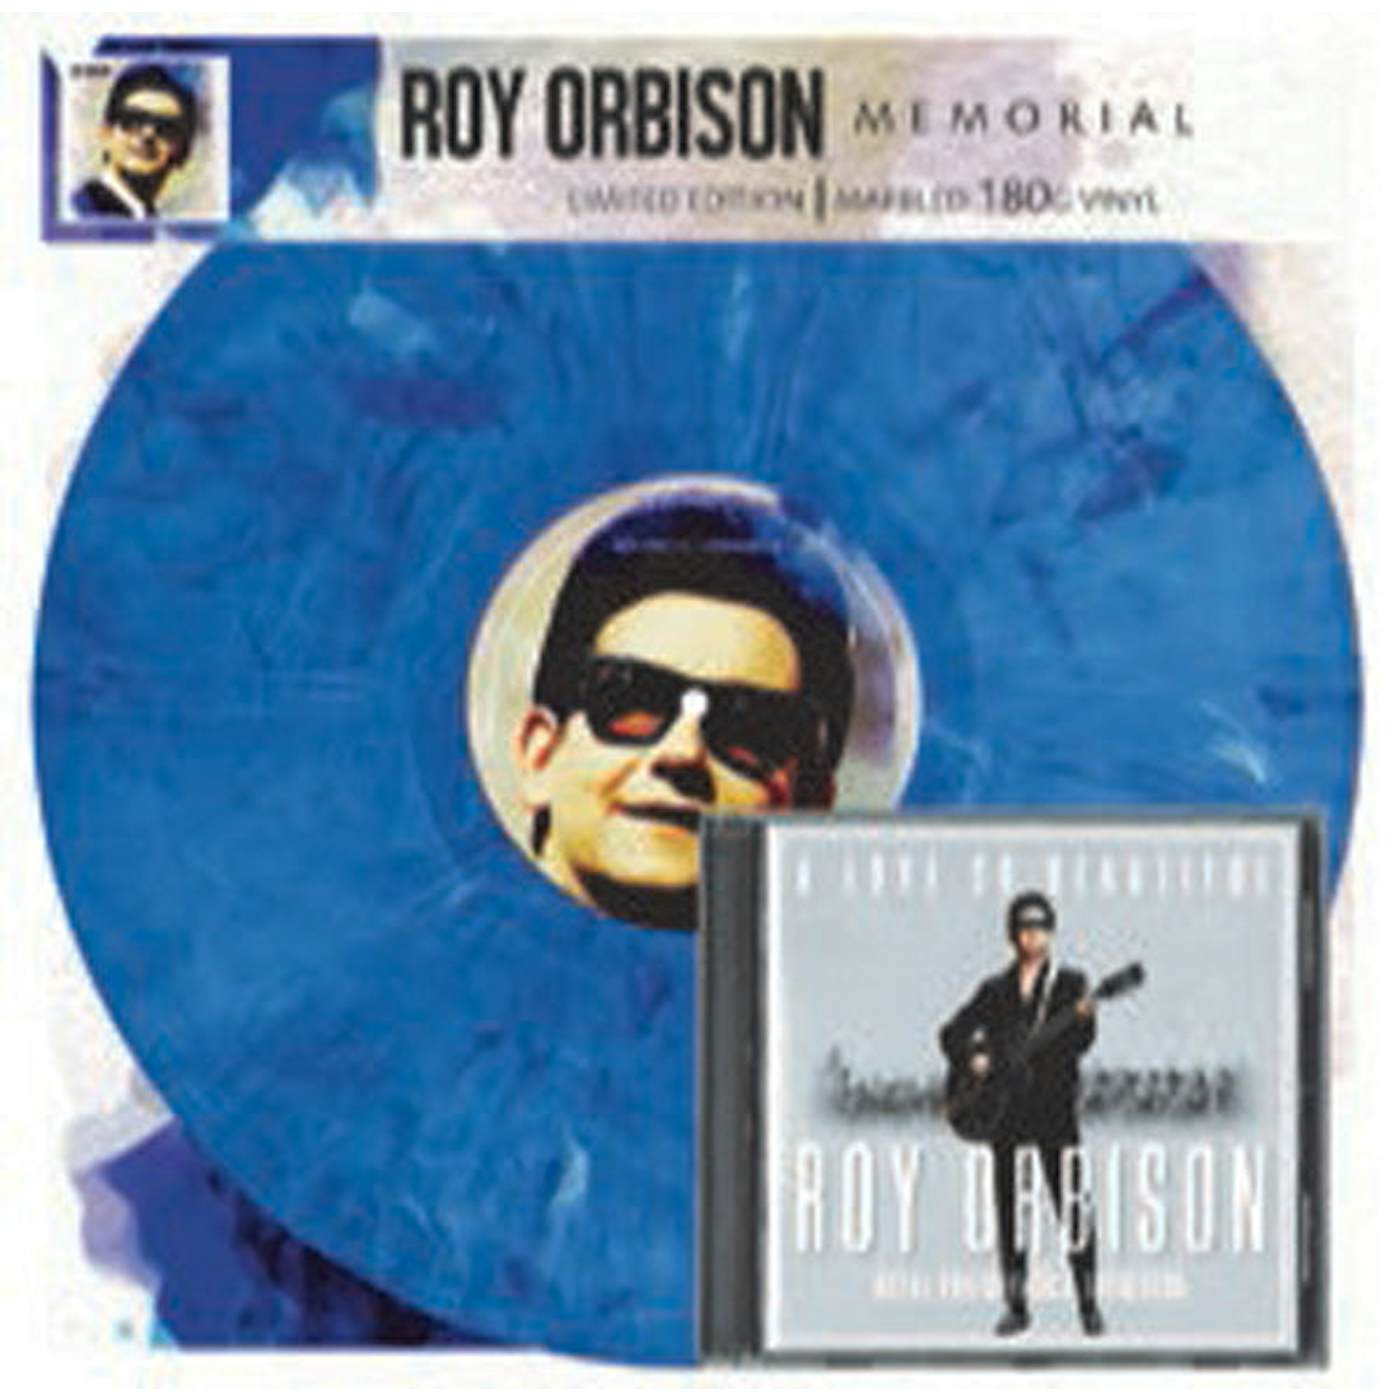 Roy Orbison LP - Memorial (+ A Love So Beautiful Cd)